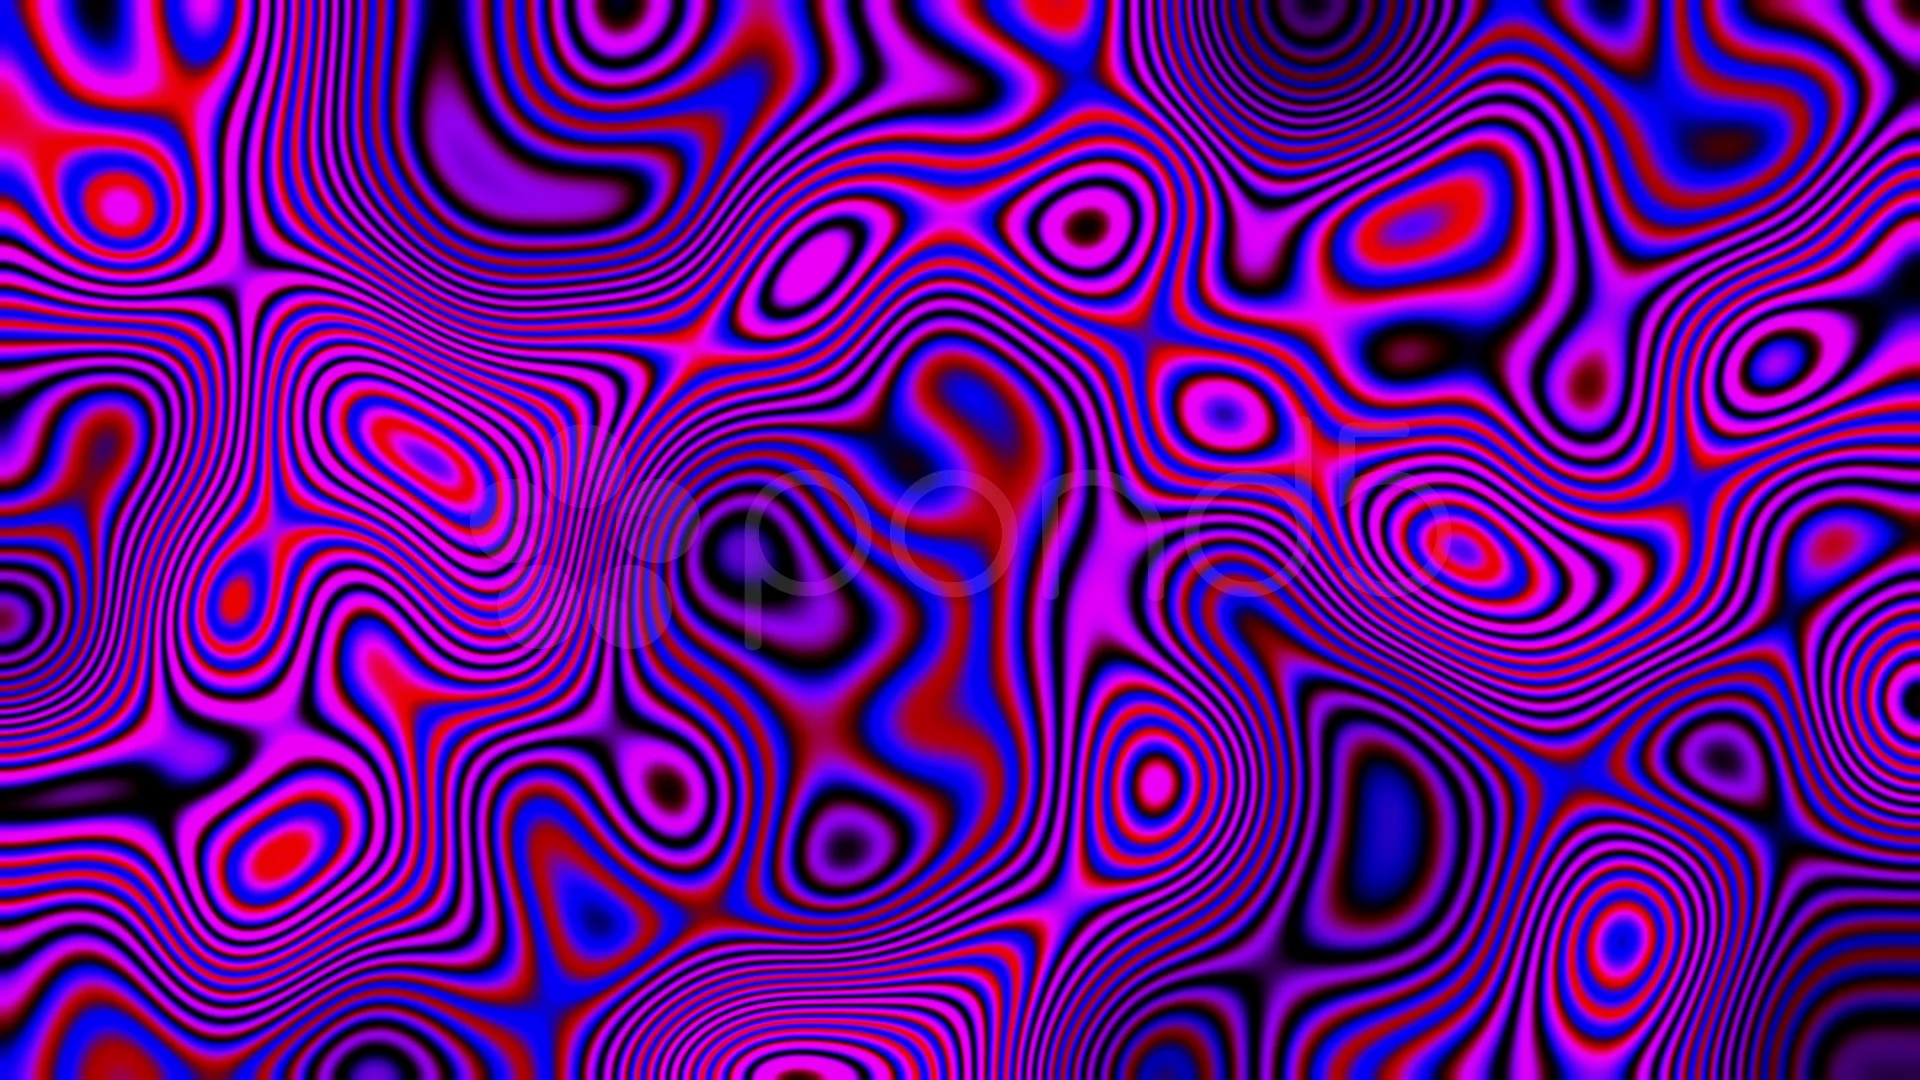 Wallpaper  abstract fluid liquid artwork ArtStation behance shapes  paint brushes purple background 3840x2160  Adelalinka  2141339  HD  Wallpapers  WallHere